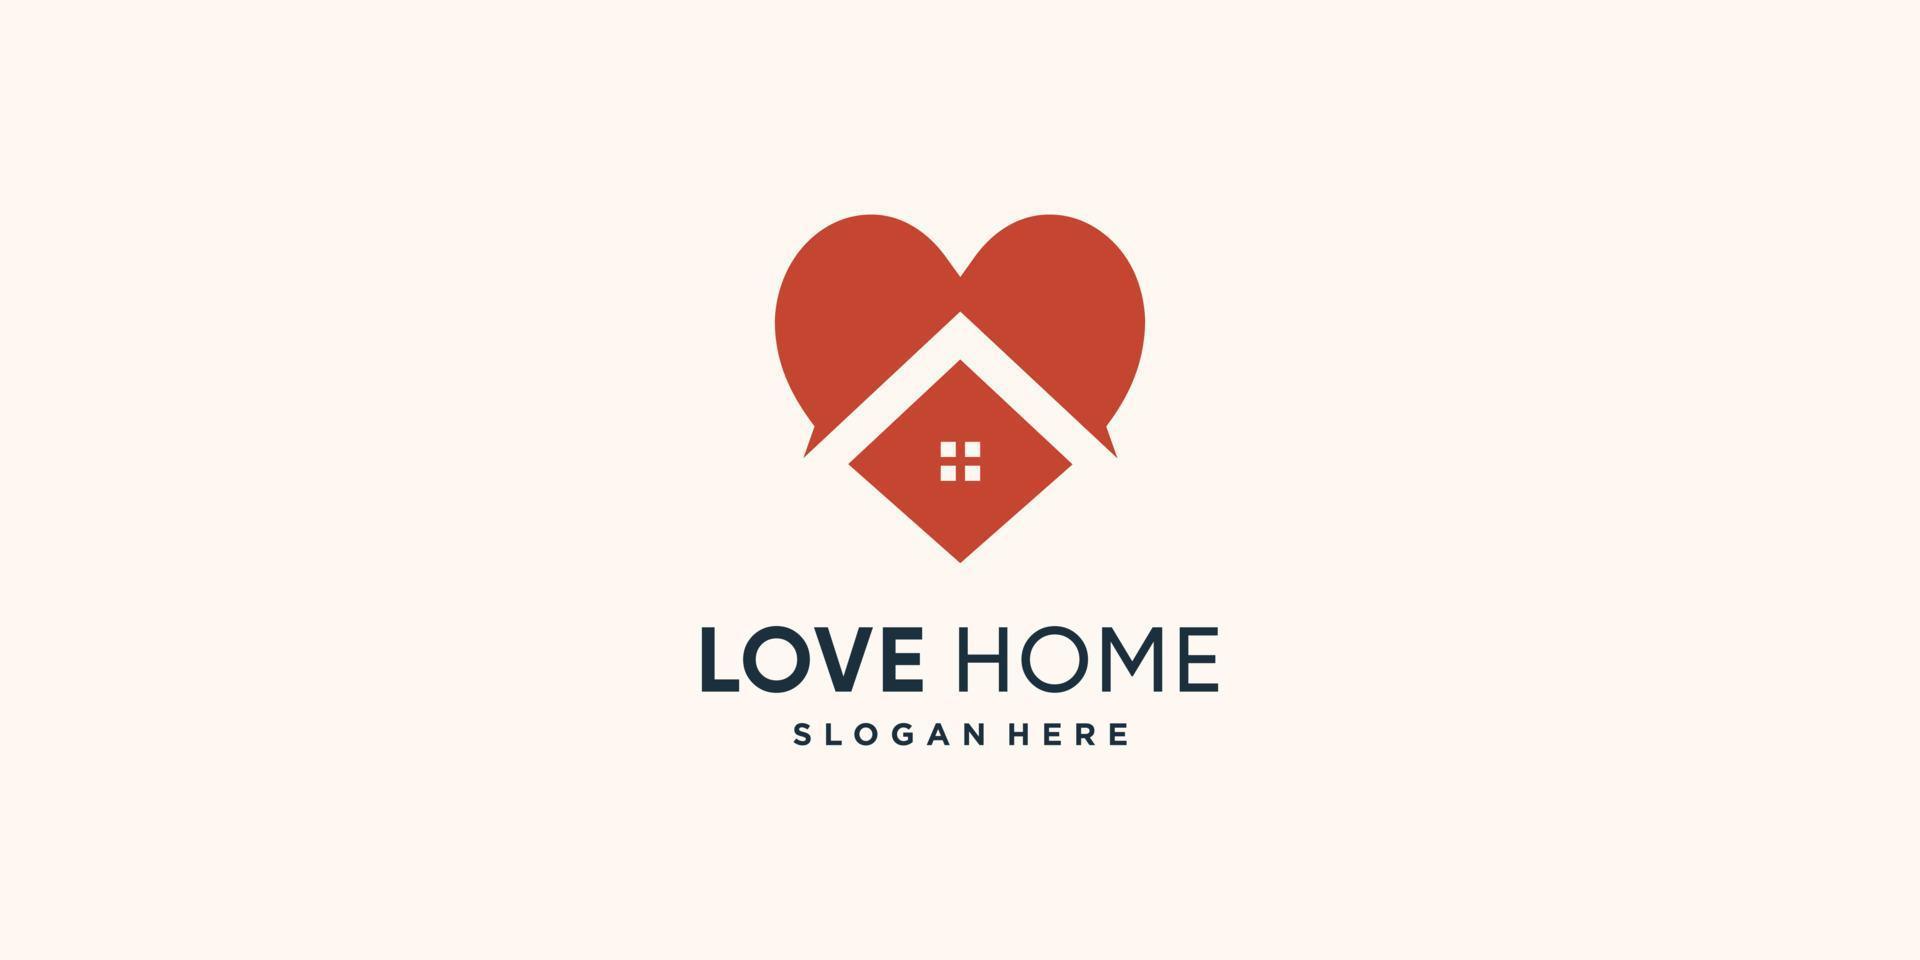 House logo with creative love concept Premium Vector part 2